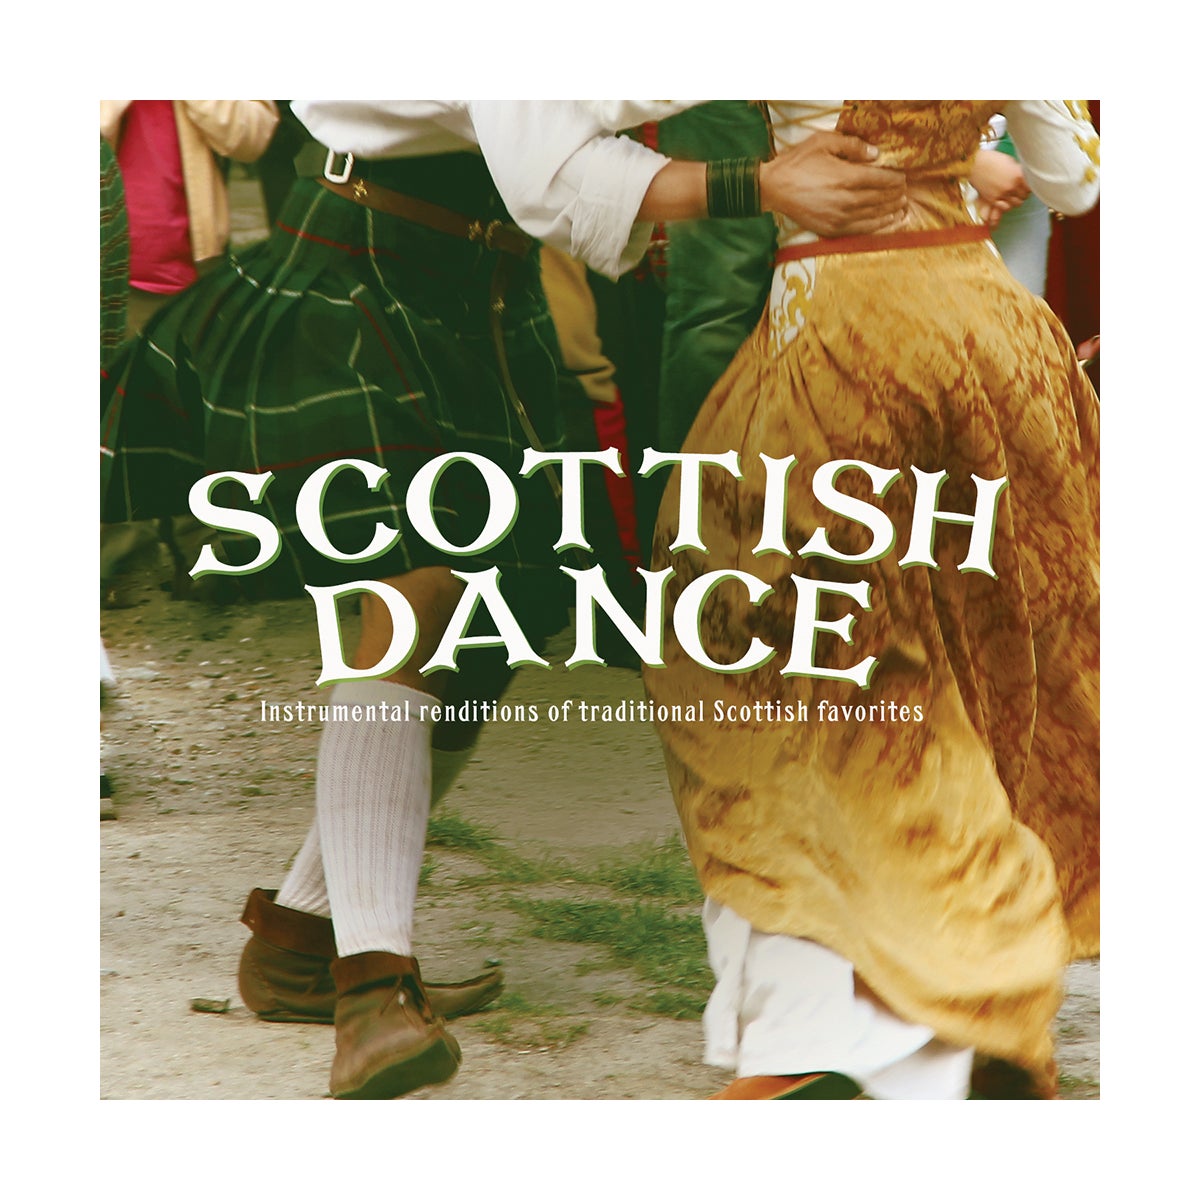 Scottish Dance: Instrumental renditions of traditional Scottish favorites